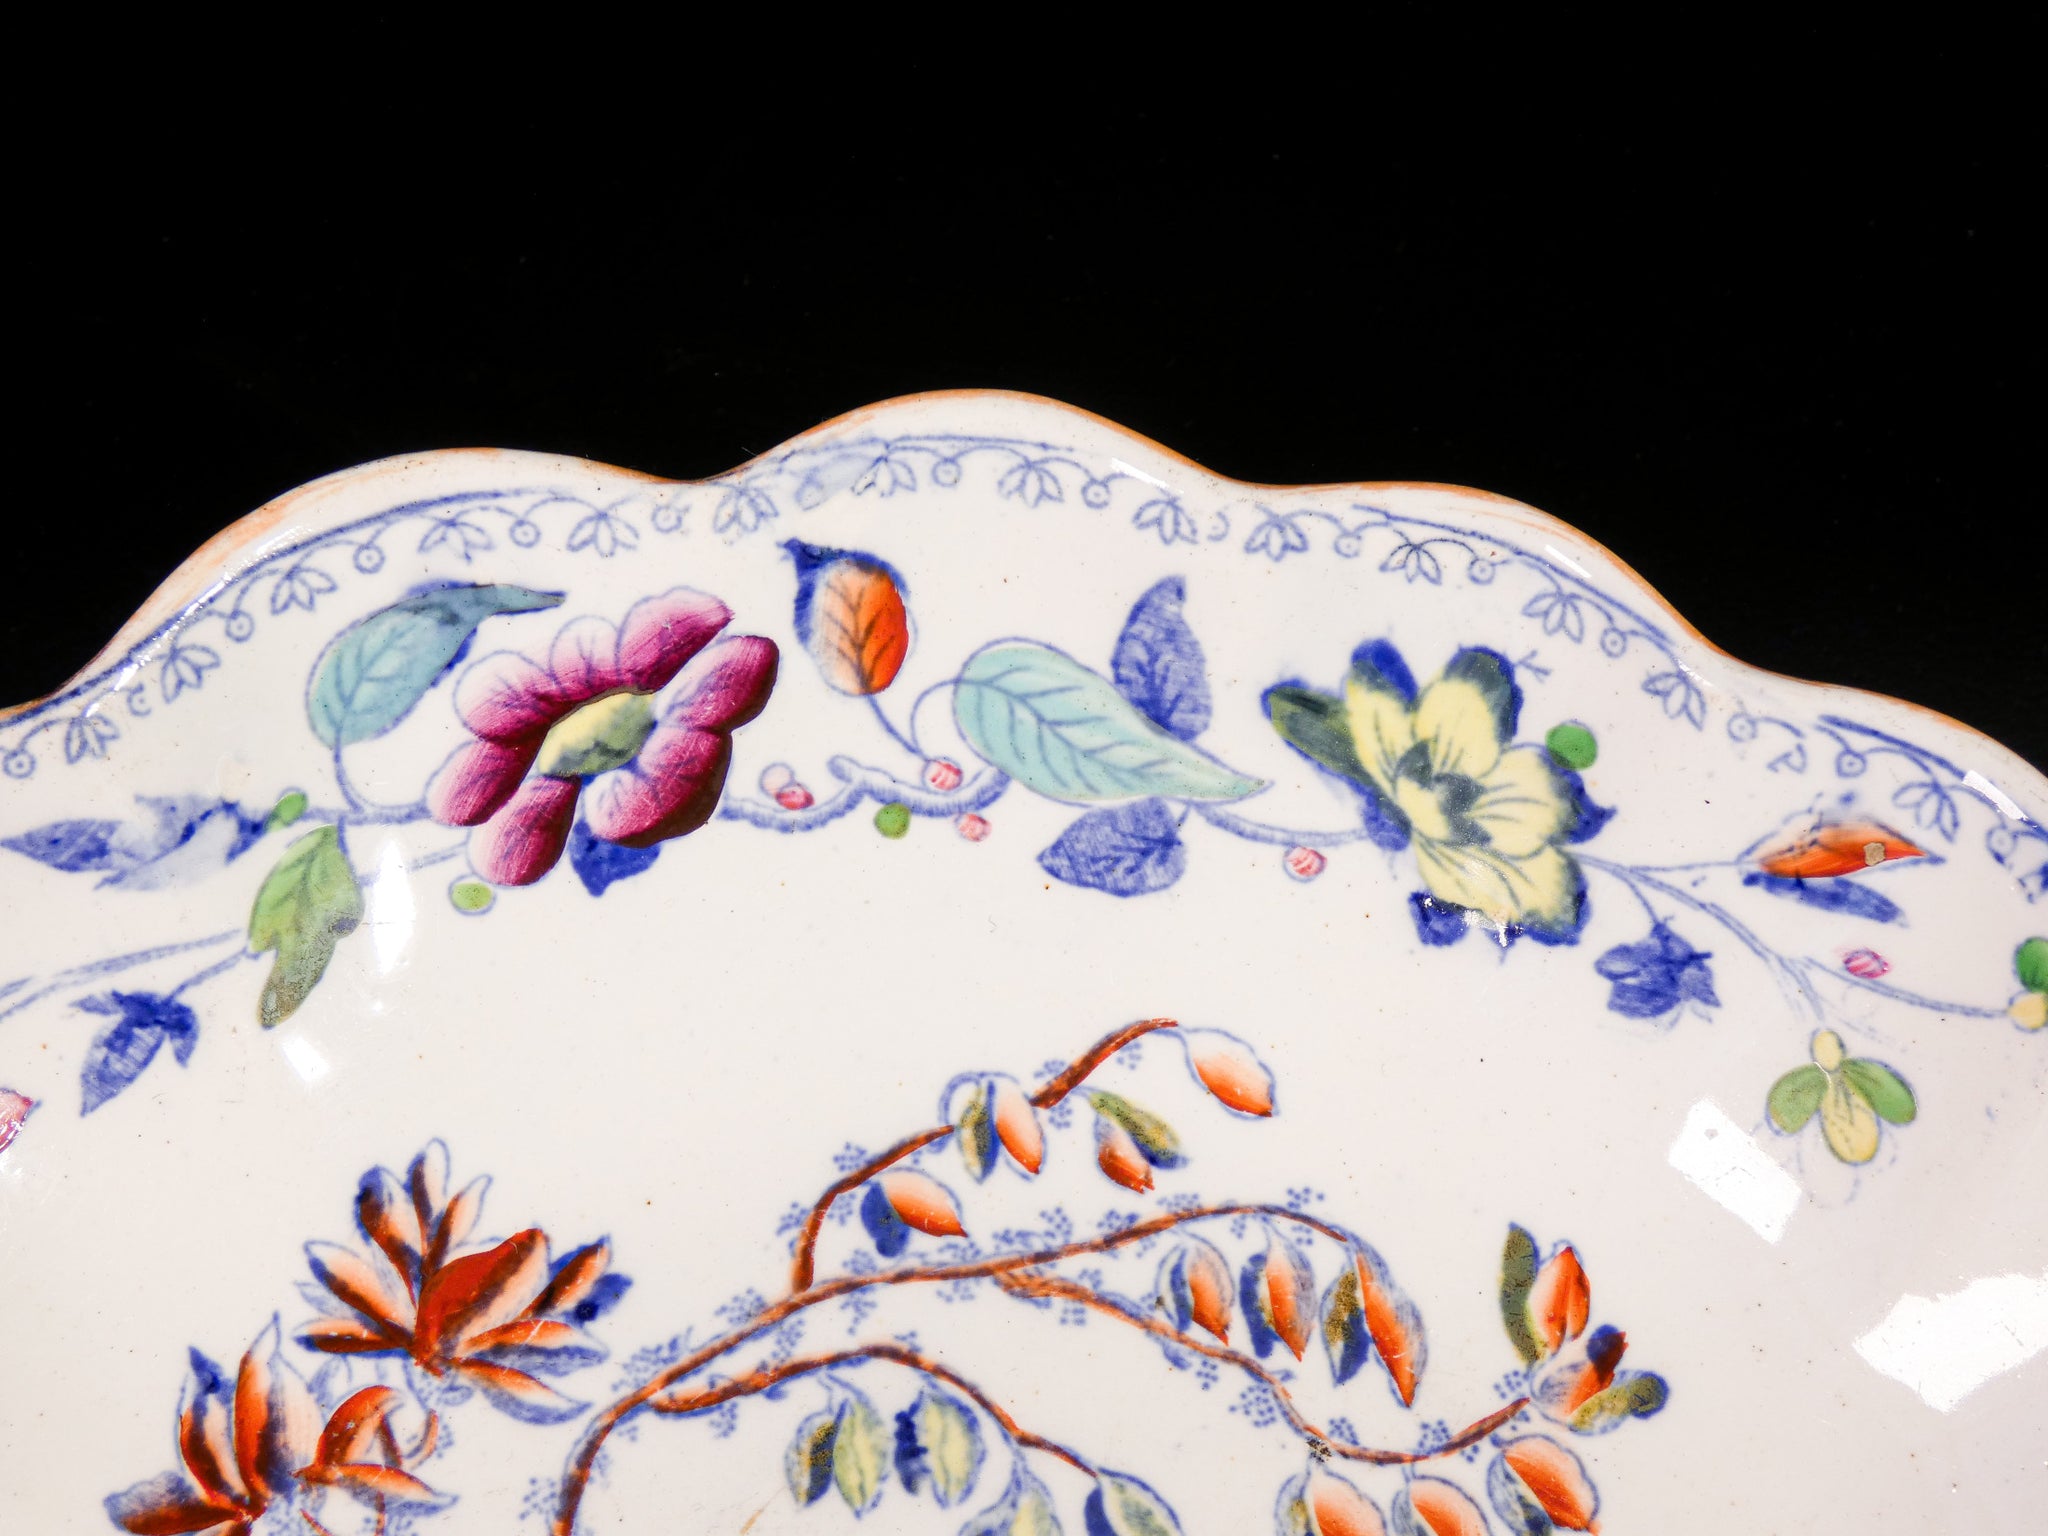 piatto vassoio davenport flying bird piatti ceramica porcellana 1810 antico